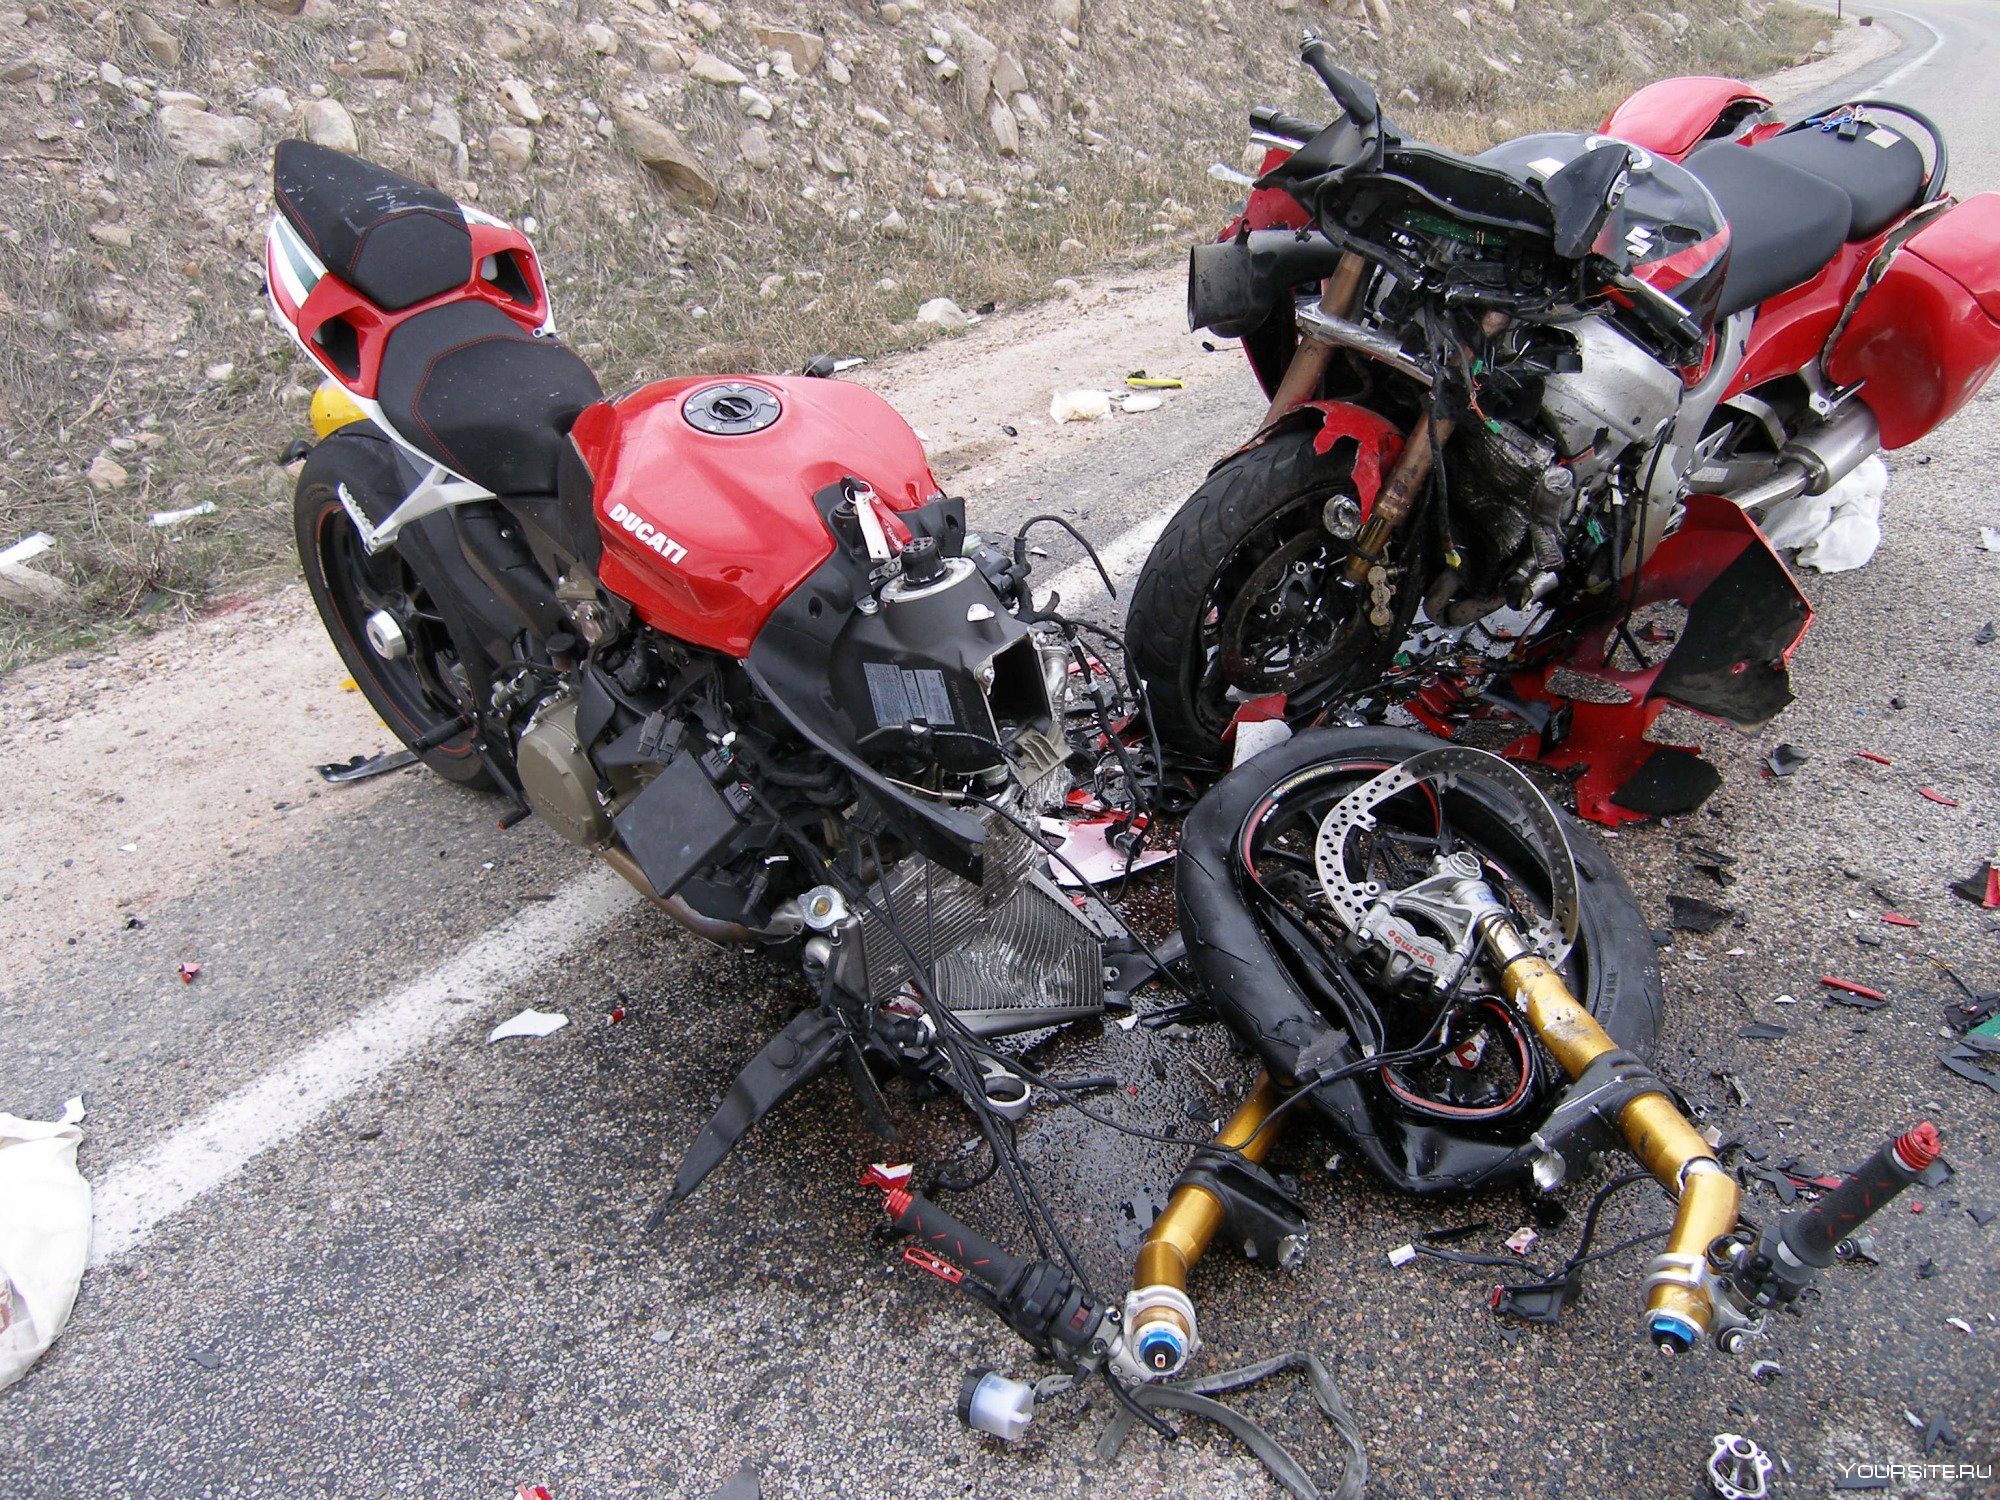 Мотоцикл после аварии. Разбитый мотоцикл диабло р1. Разбитый красный Ямаха р1. Мотоцикл диабло р1 после аварии.